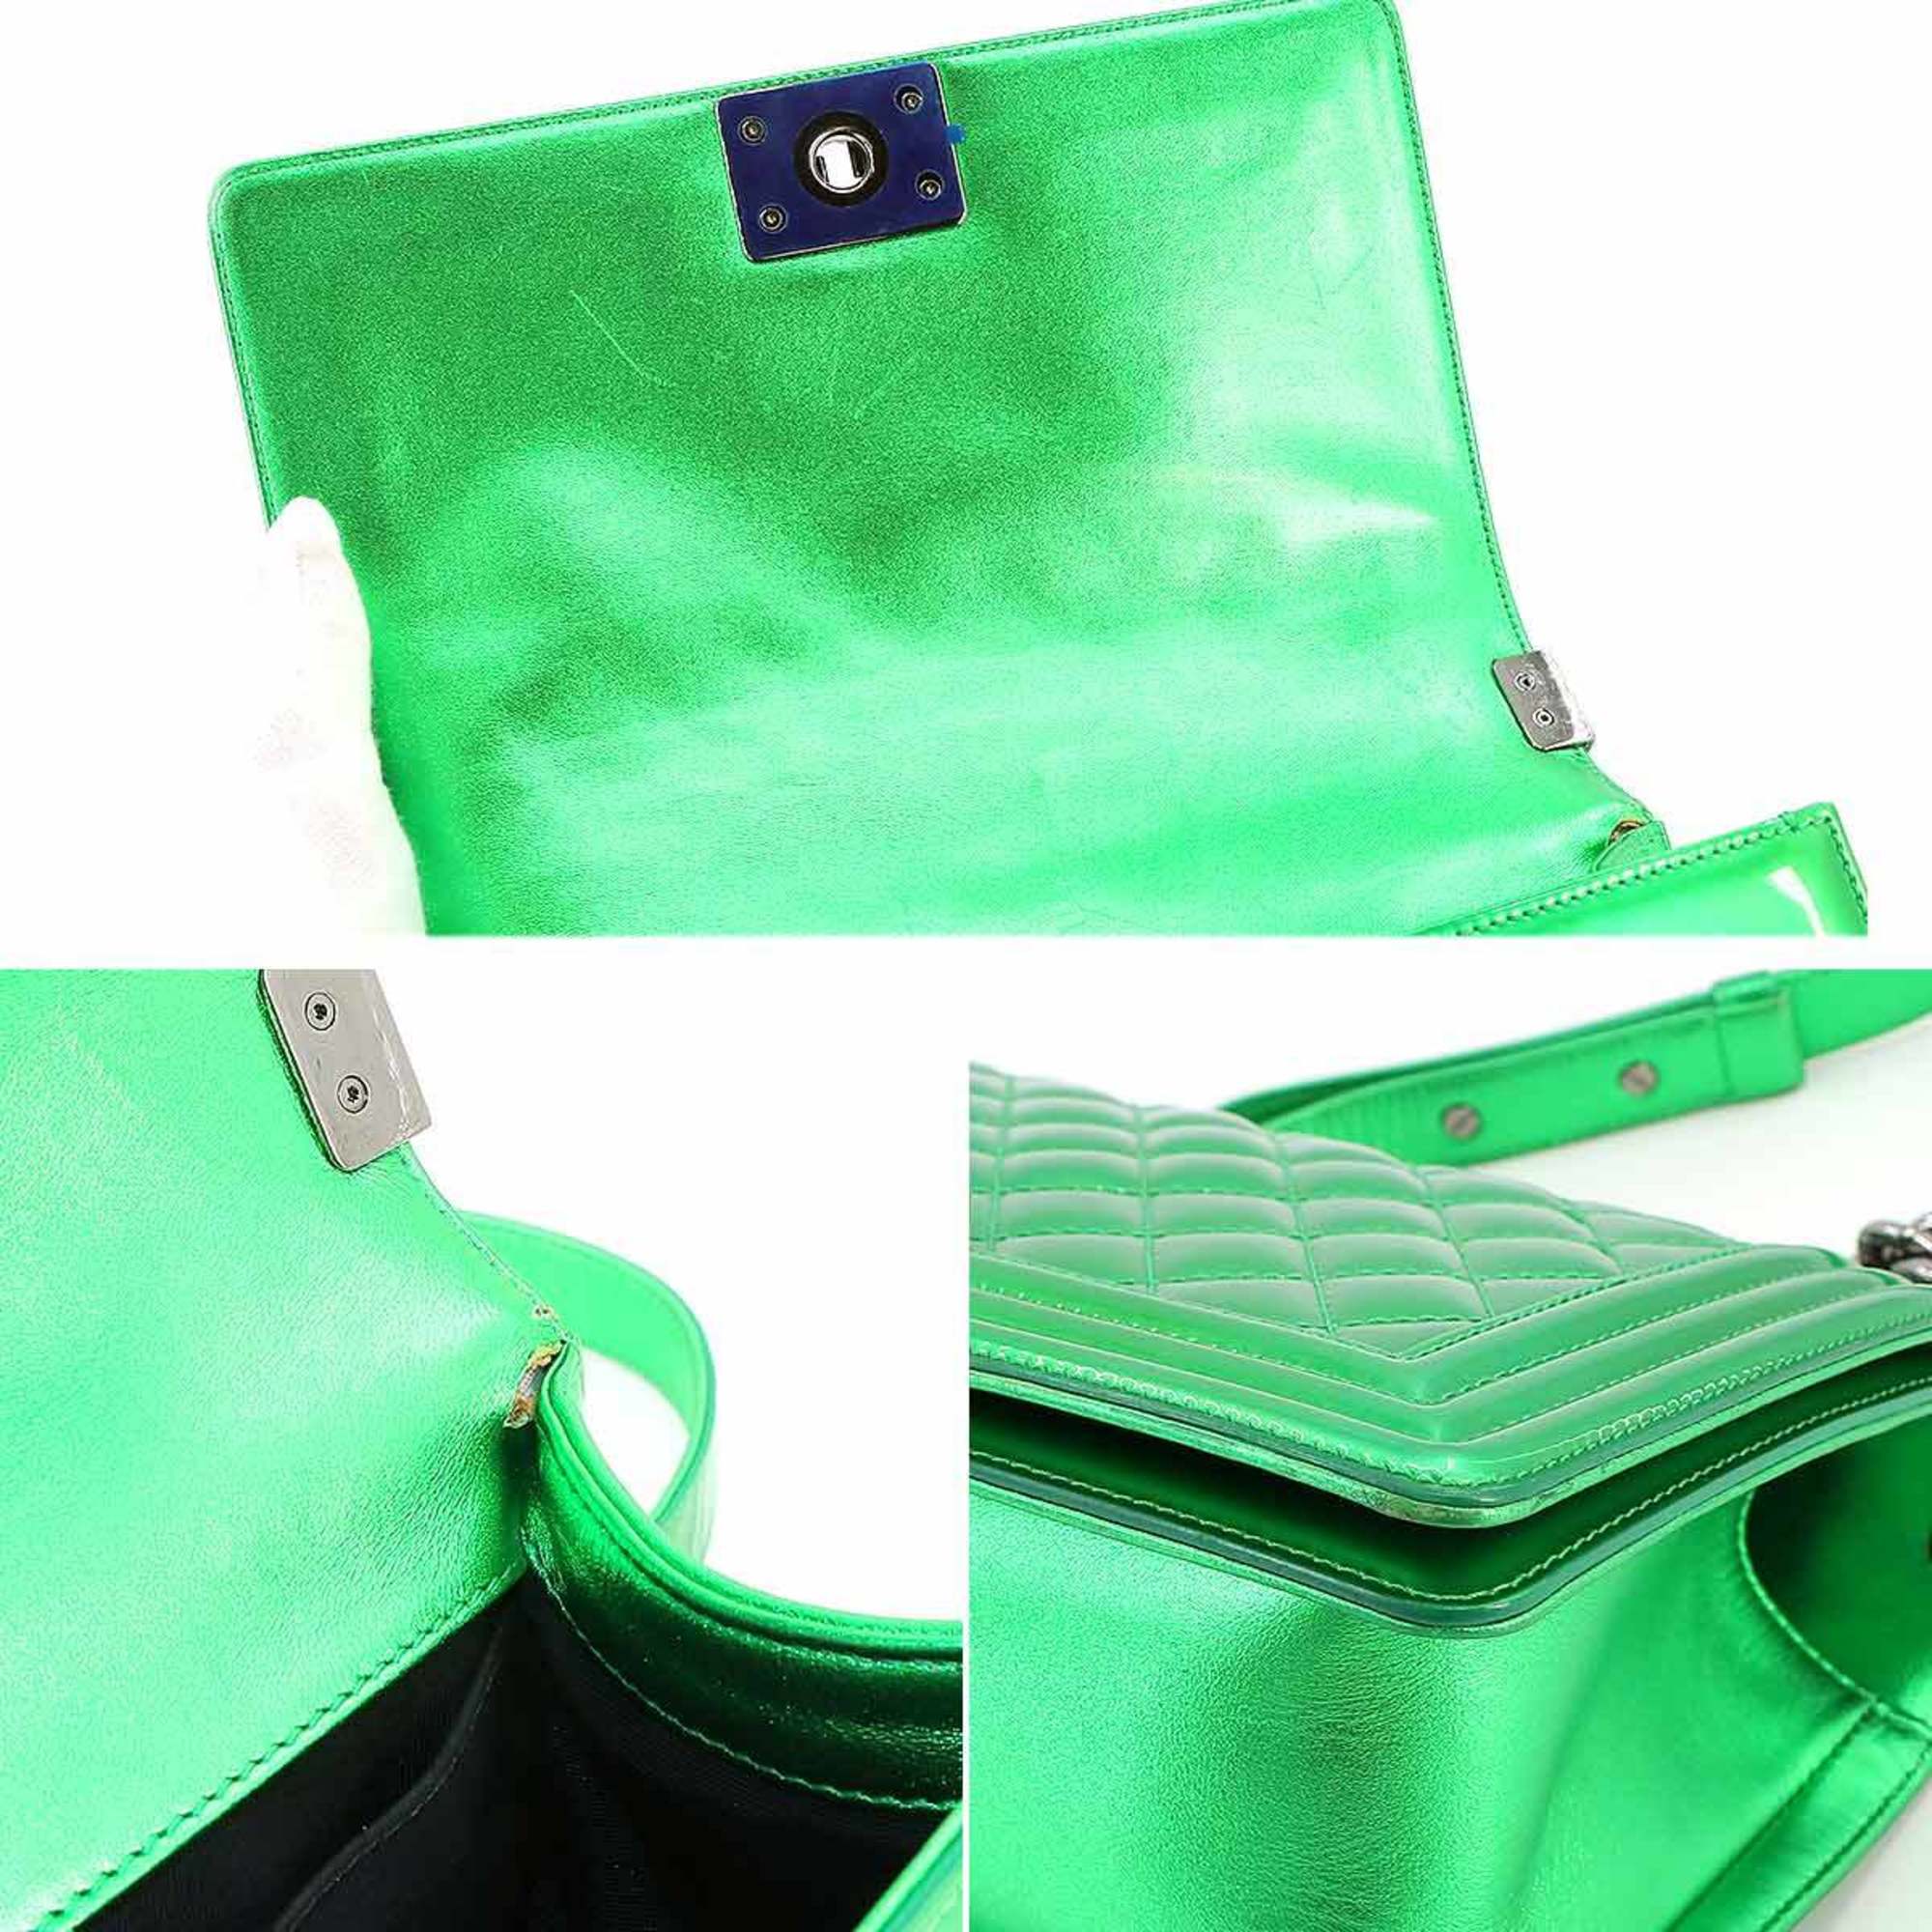 CHANEL Boy Chanel Chain Shoulder Bag Enamel Metallic Green A67086 Silver Metal Fittings